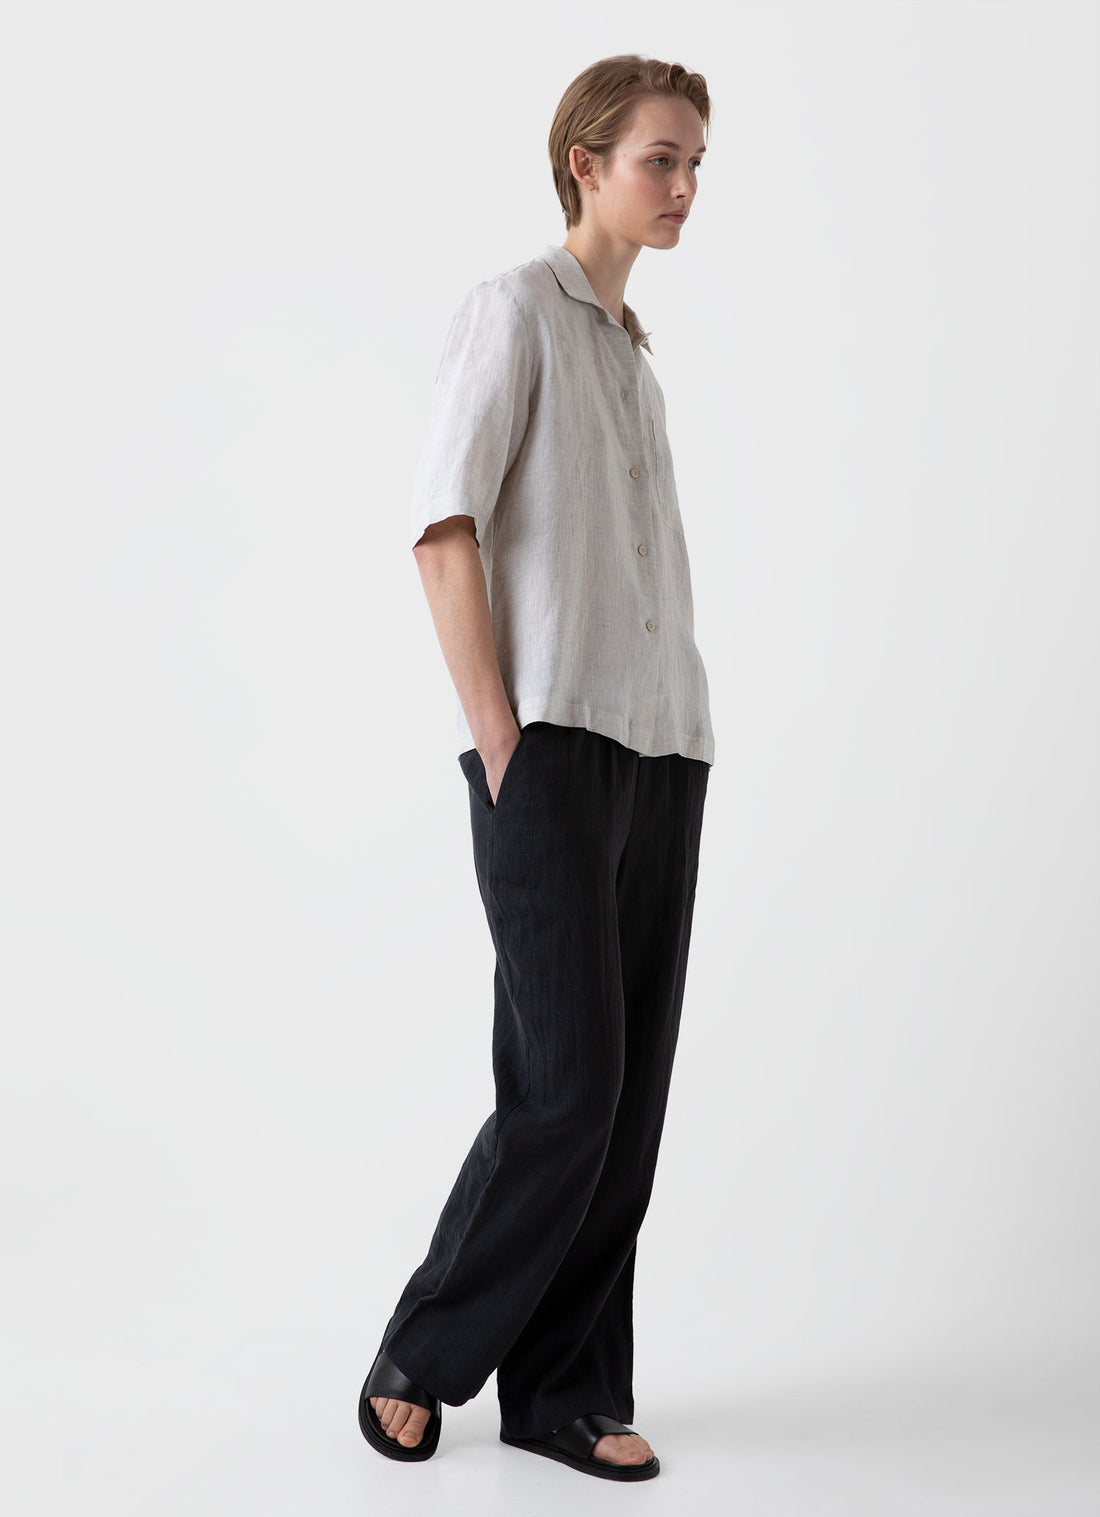 Women's Short Sleeve Linen Shirt in Oatmeal Melange